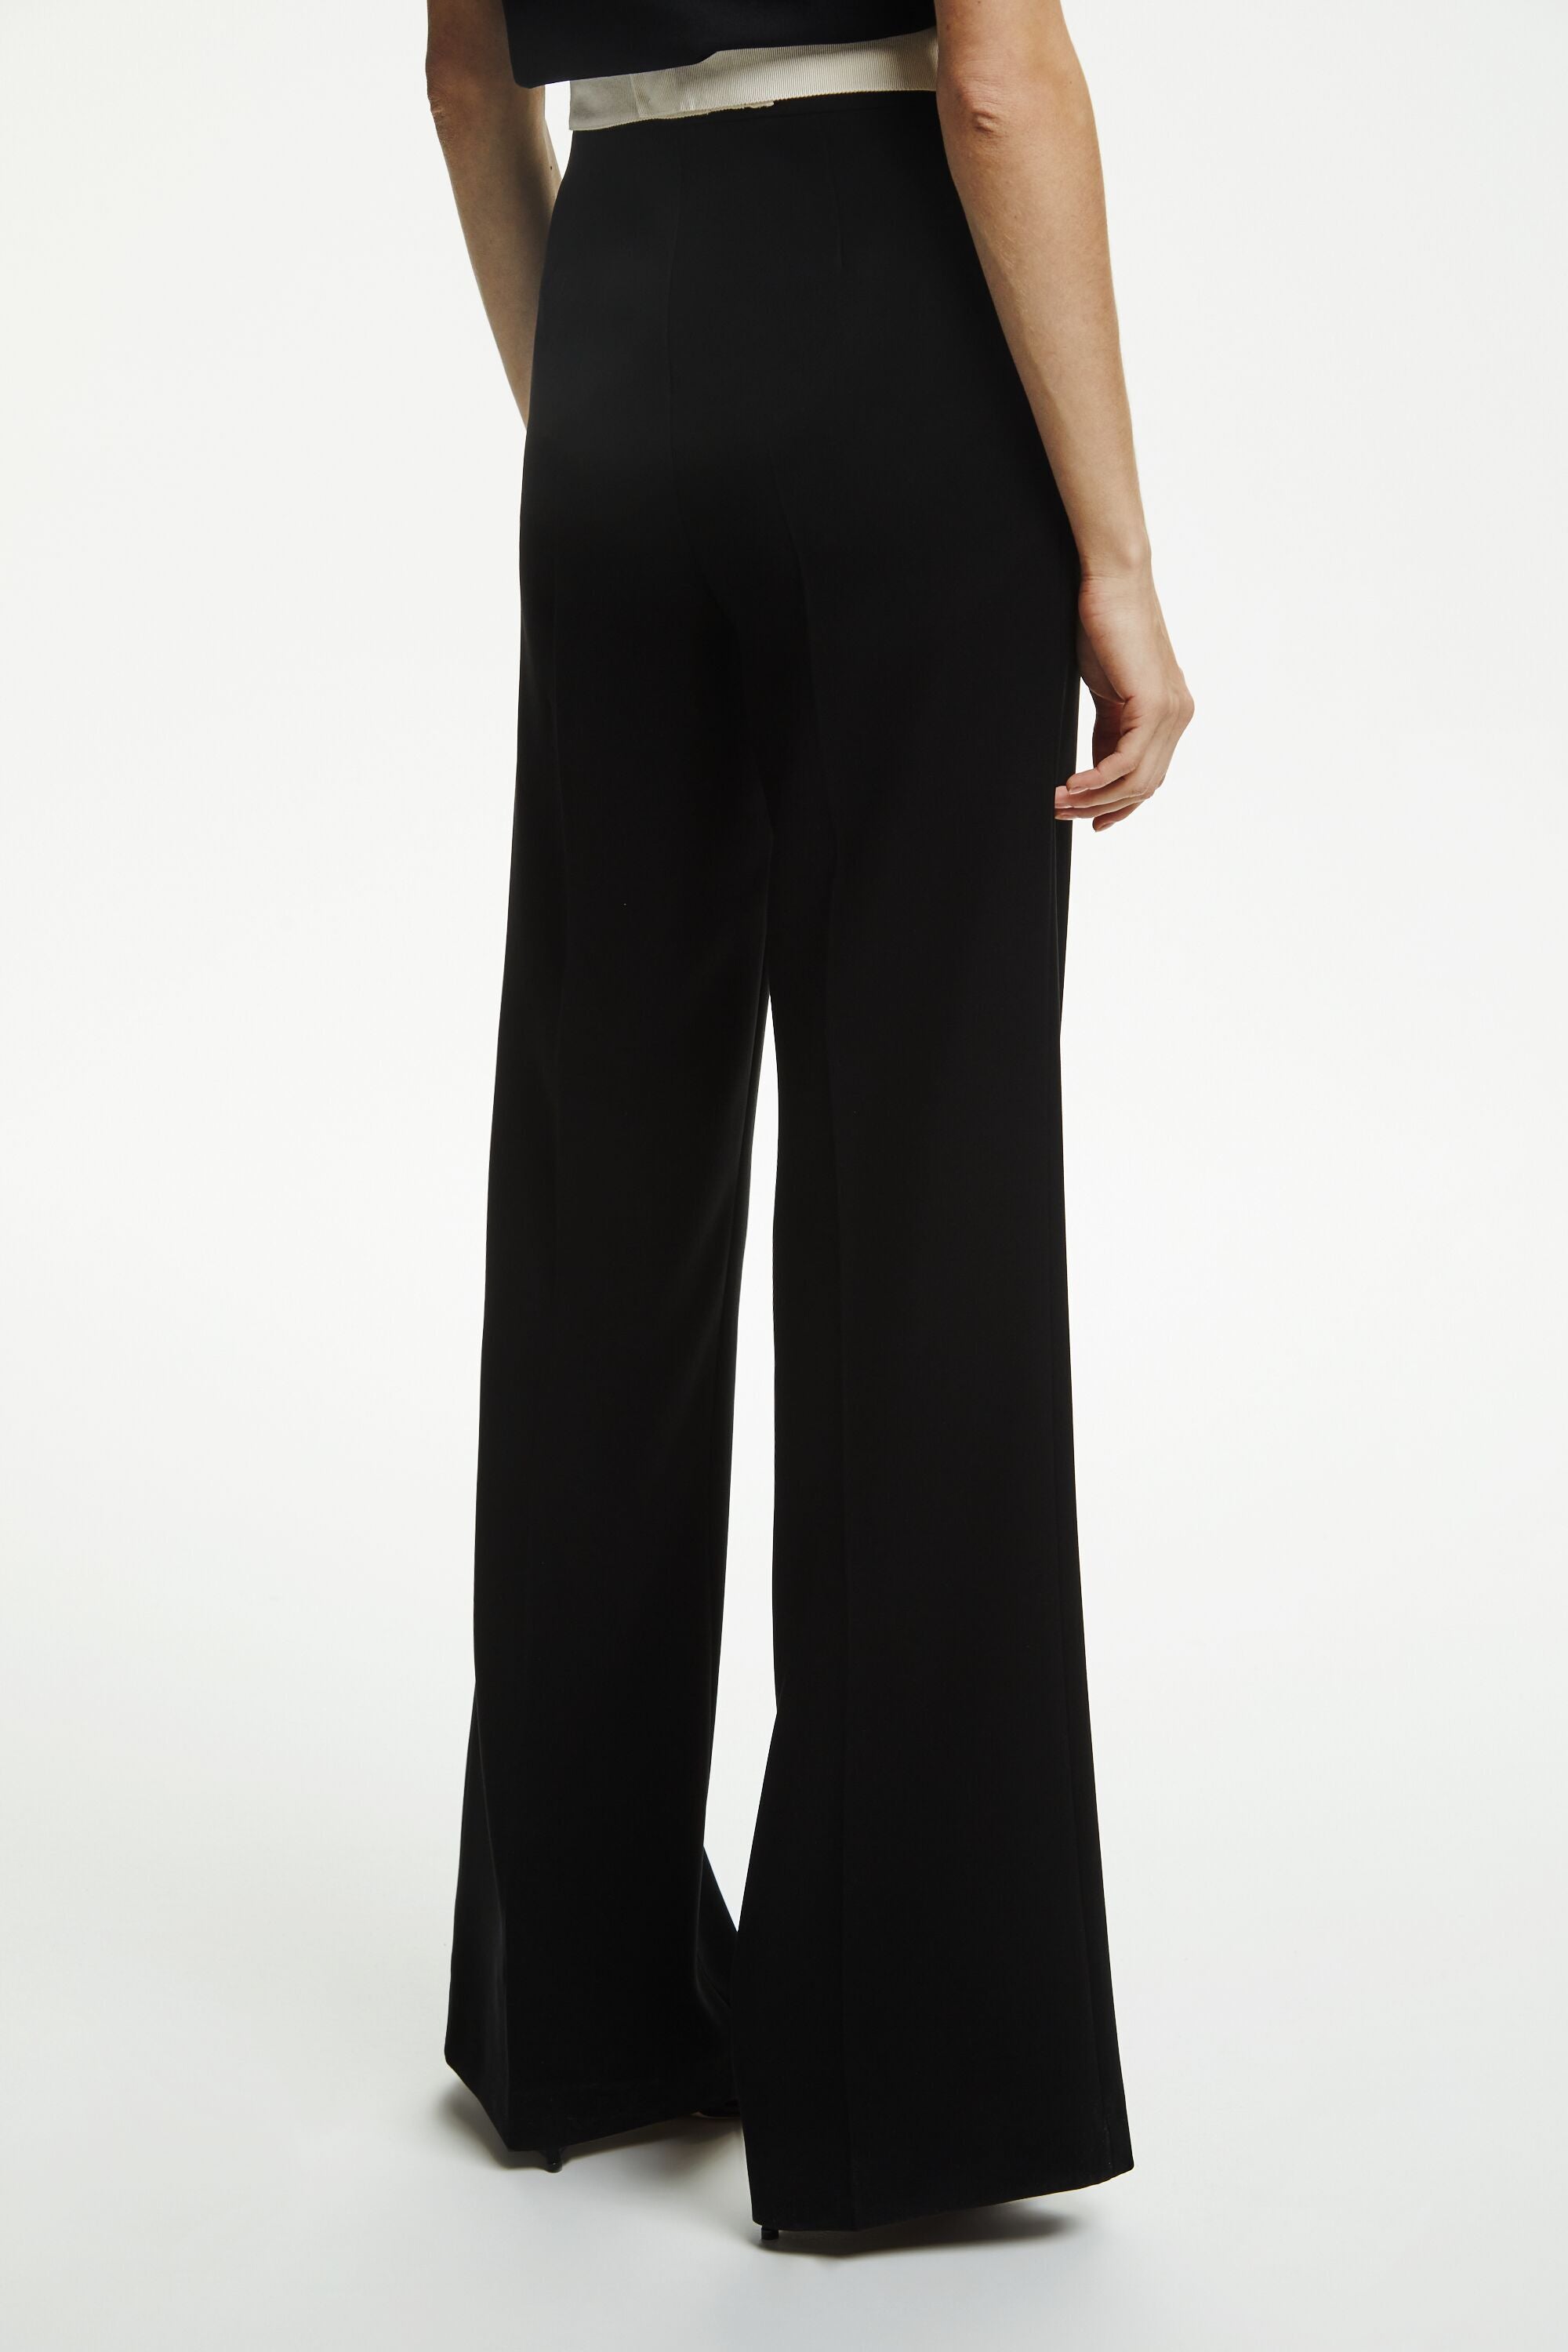 Topshop Black High Waist Peg Trousers Size 14 NWT | eBay